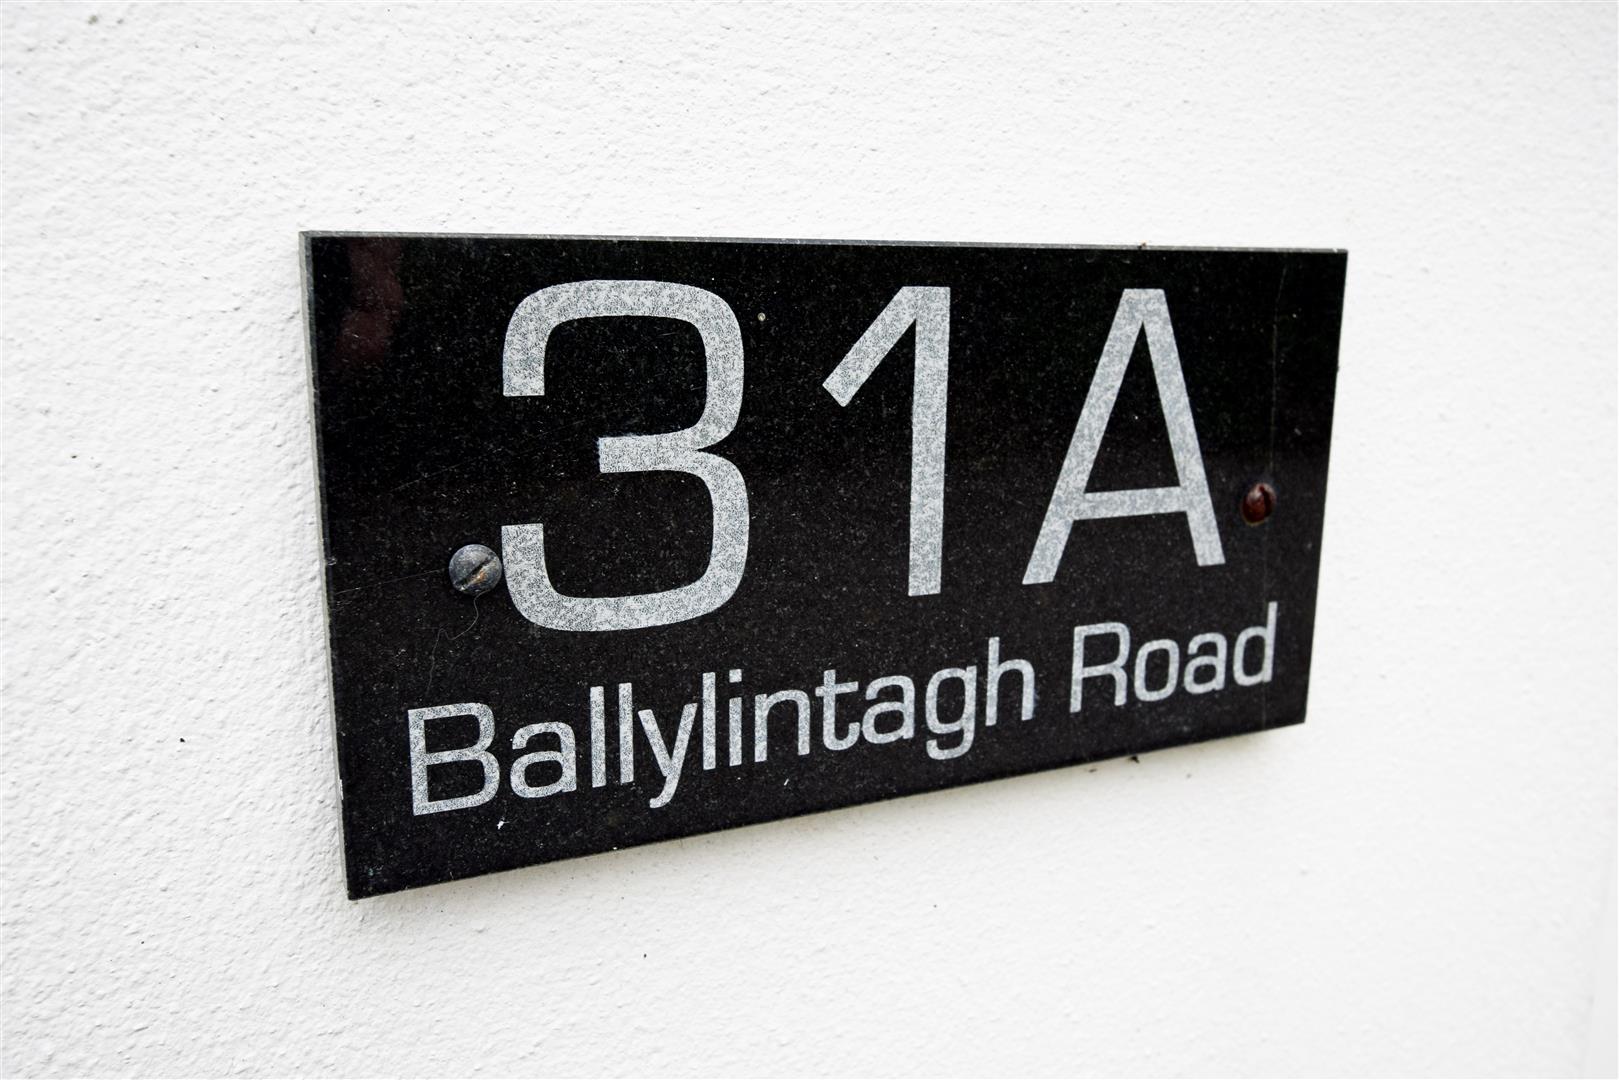 31a Ballylintagh Road